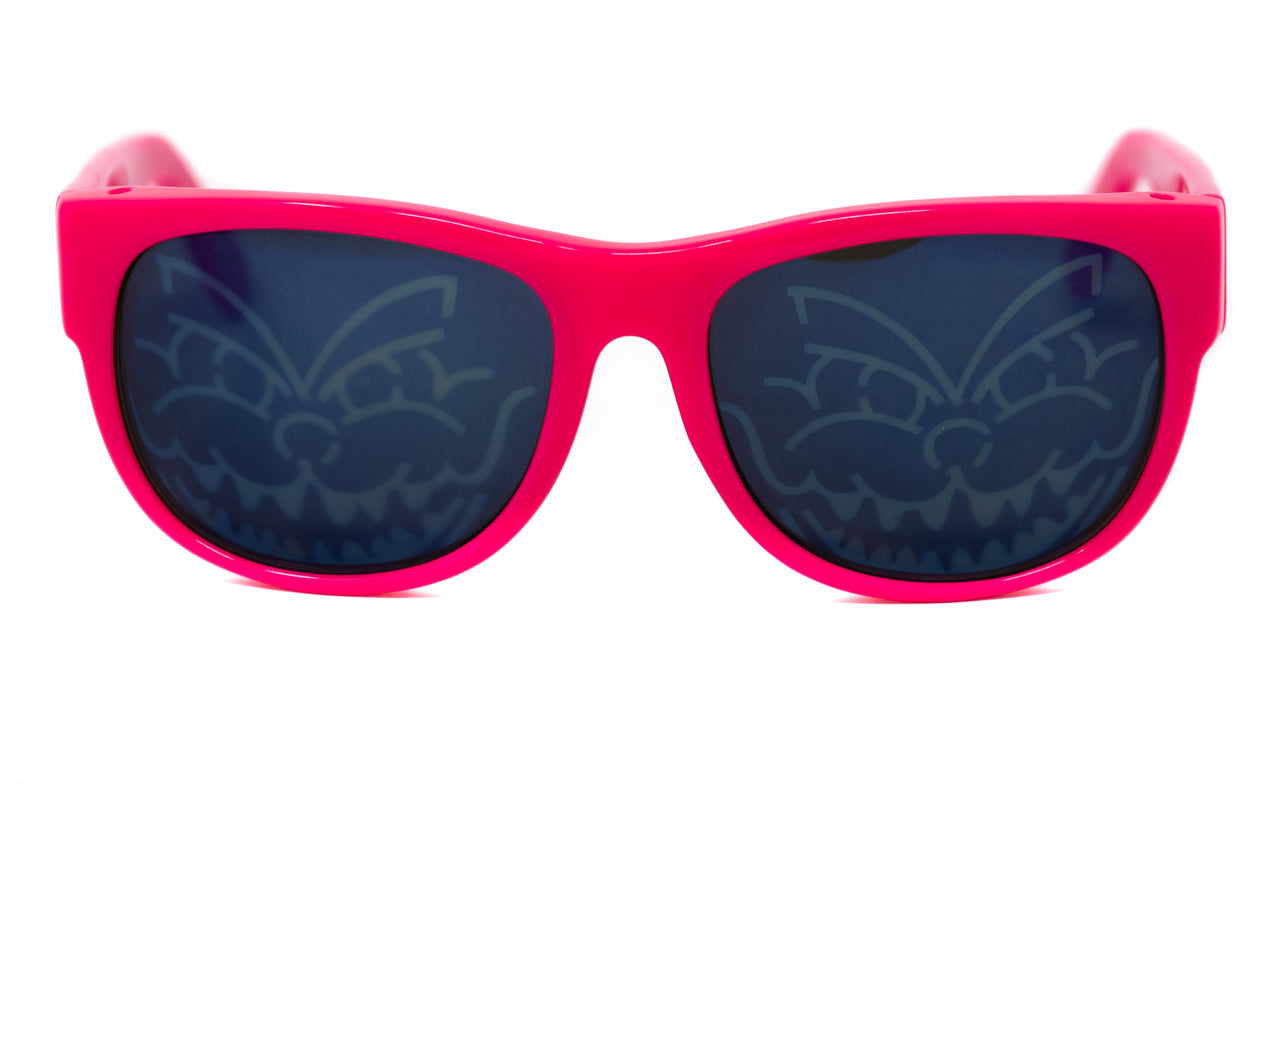 Bernhard Willhelm Sunglasses Unisex Pink Visor Blue Mirror Lenses Cat 3